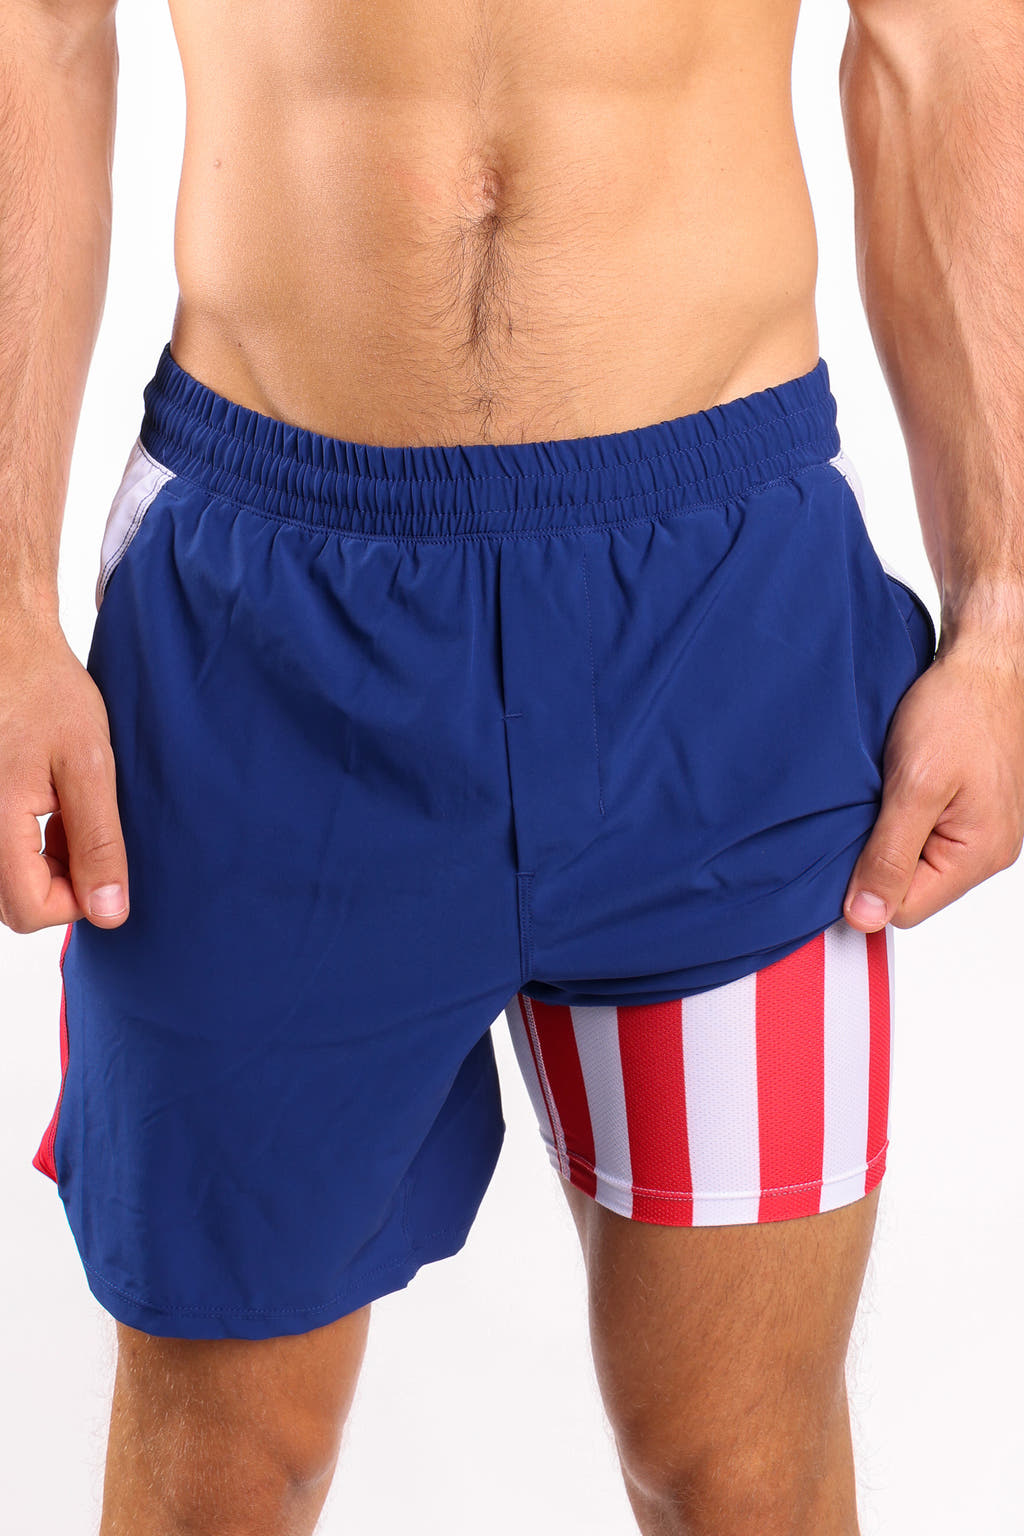 The Double Duty | American Flag Ball Hammock® 7 Inch Athletic Shorts